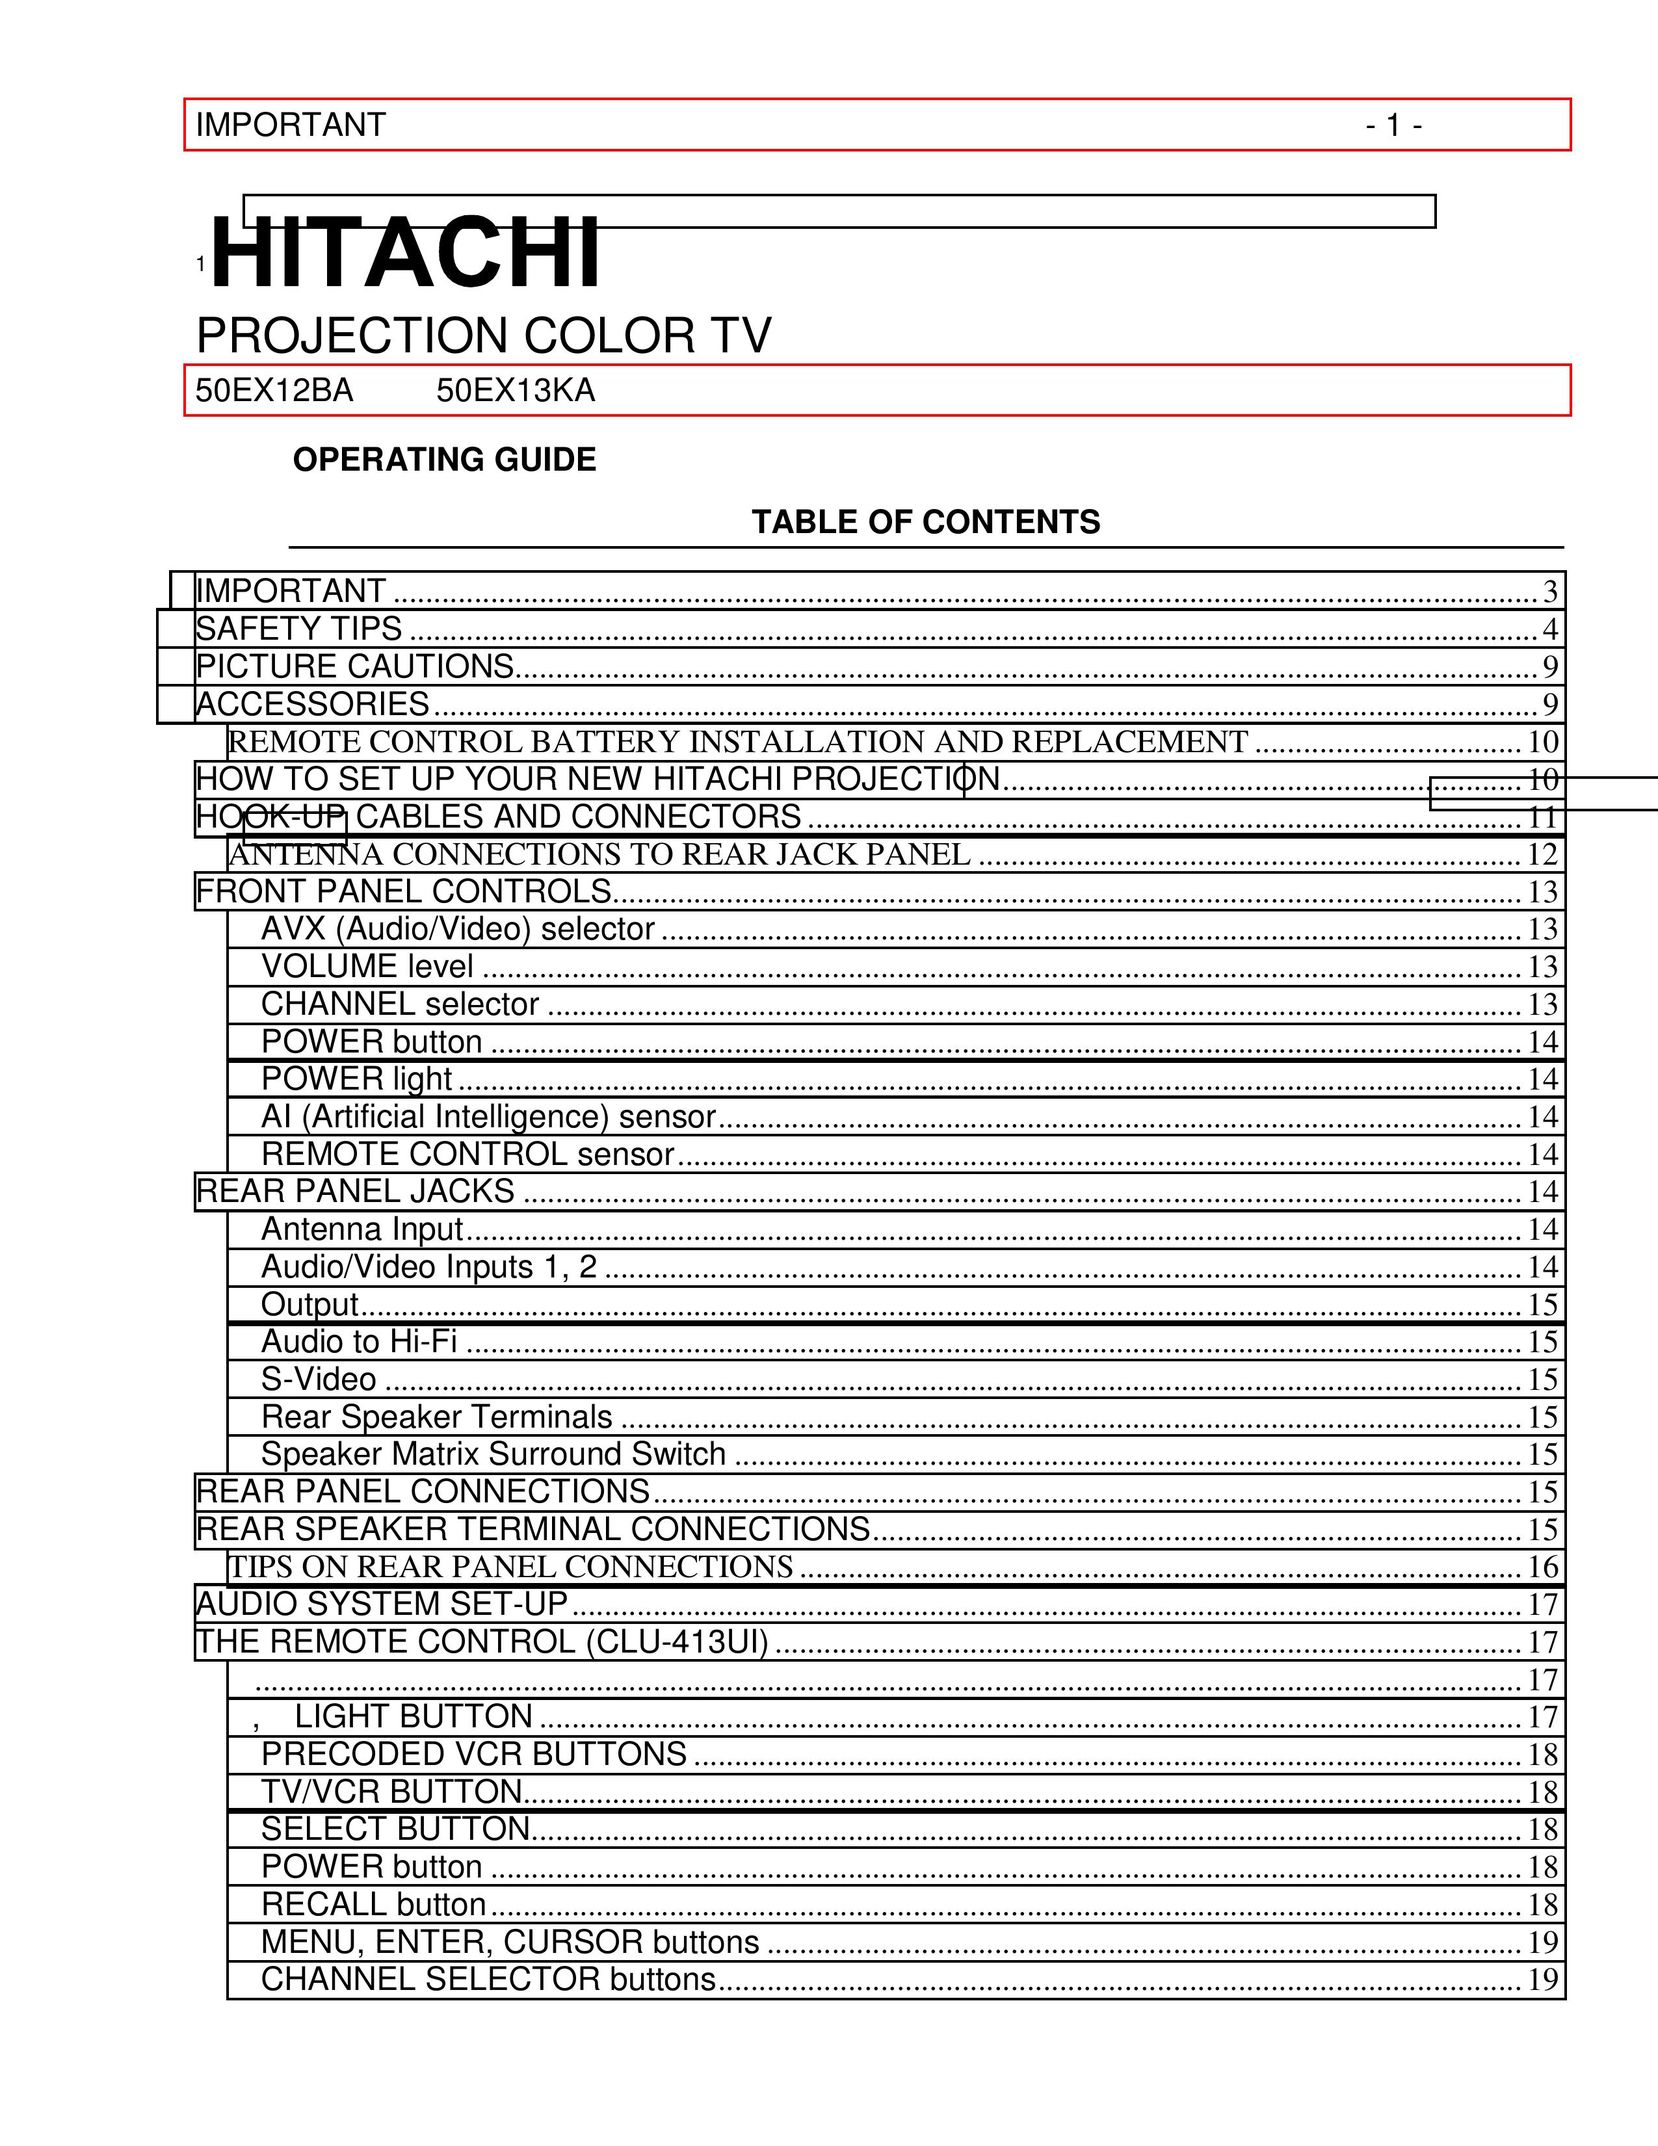 Hitachi 50EX12BA Projection Television User Manual